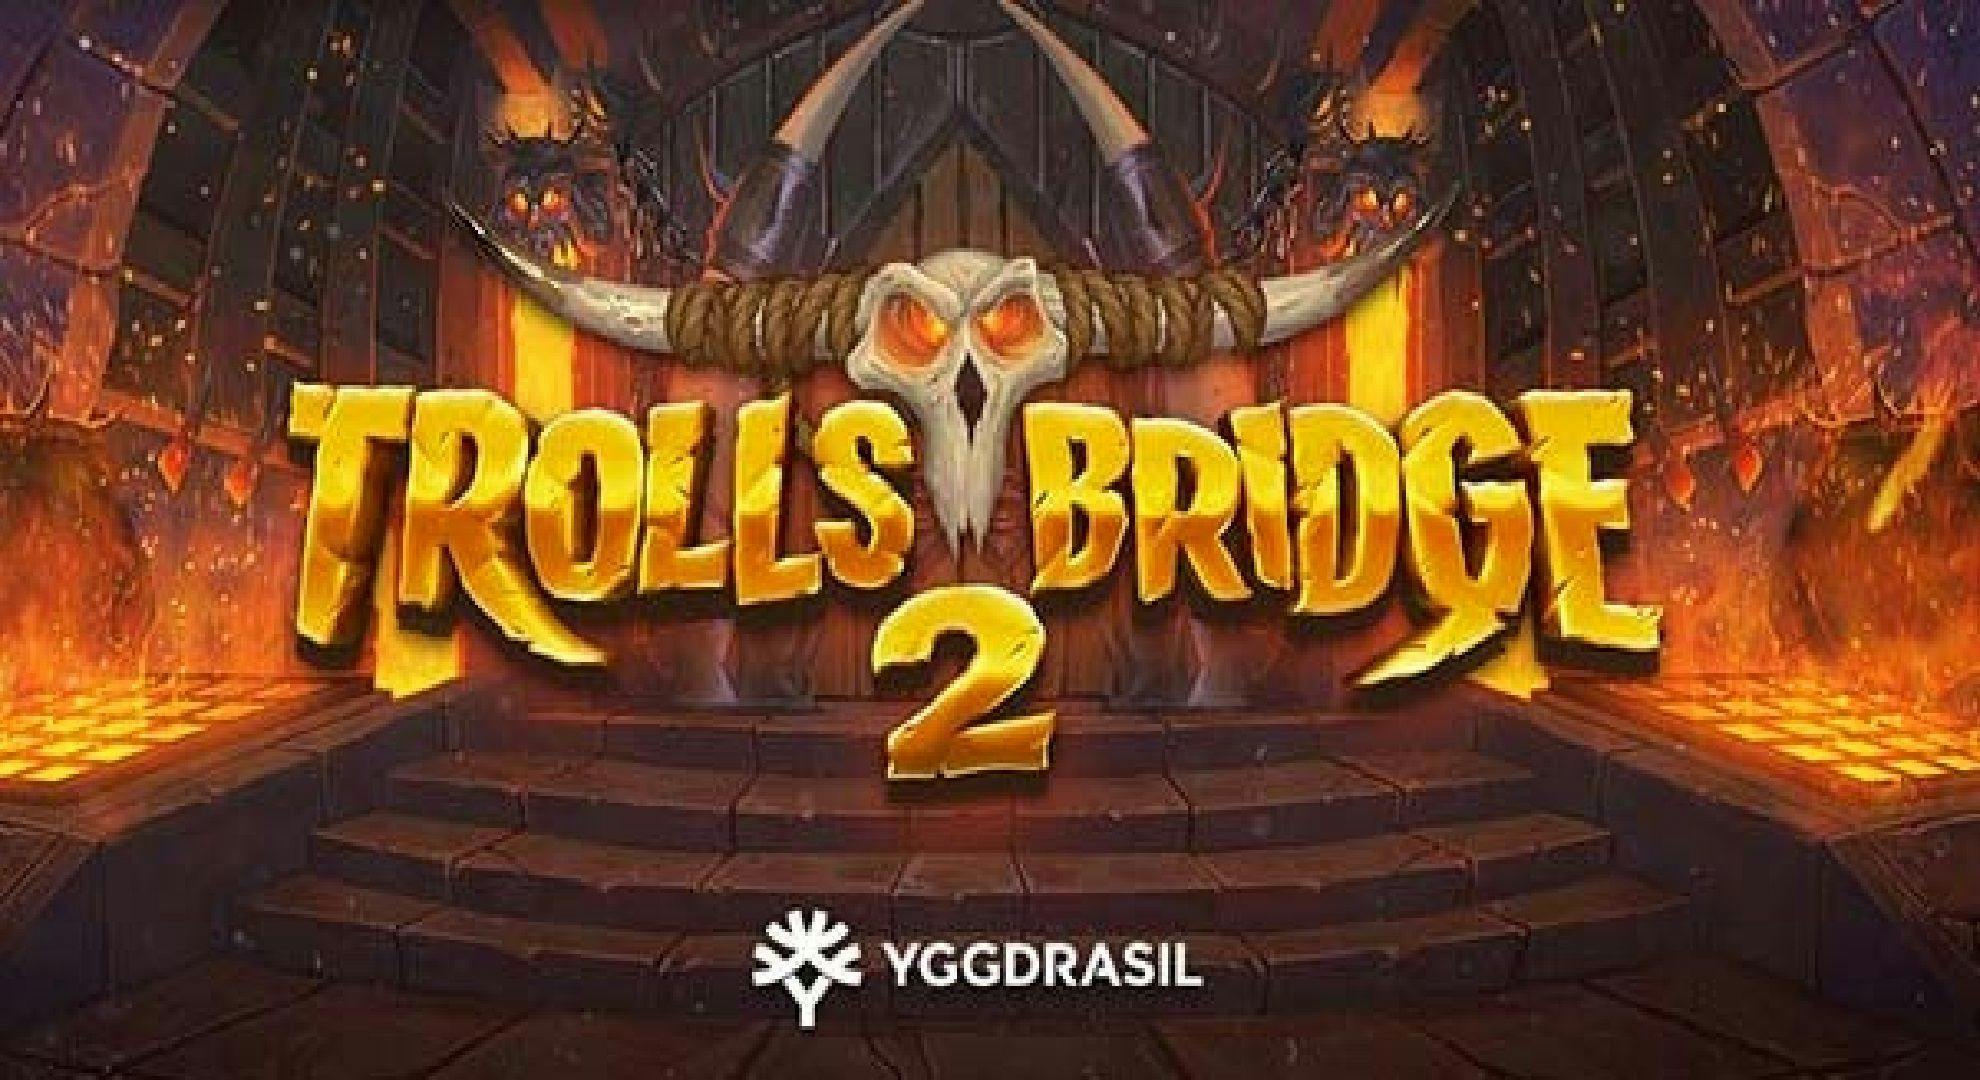 Trolls Bridge 2 Slot Online Free Play